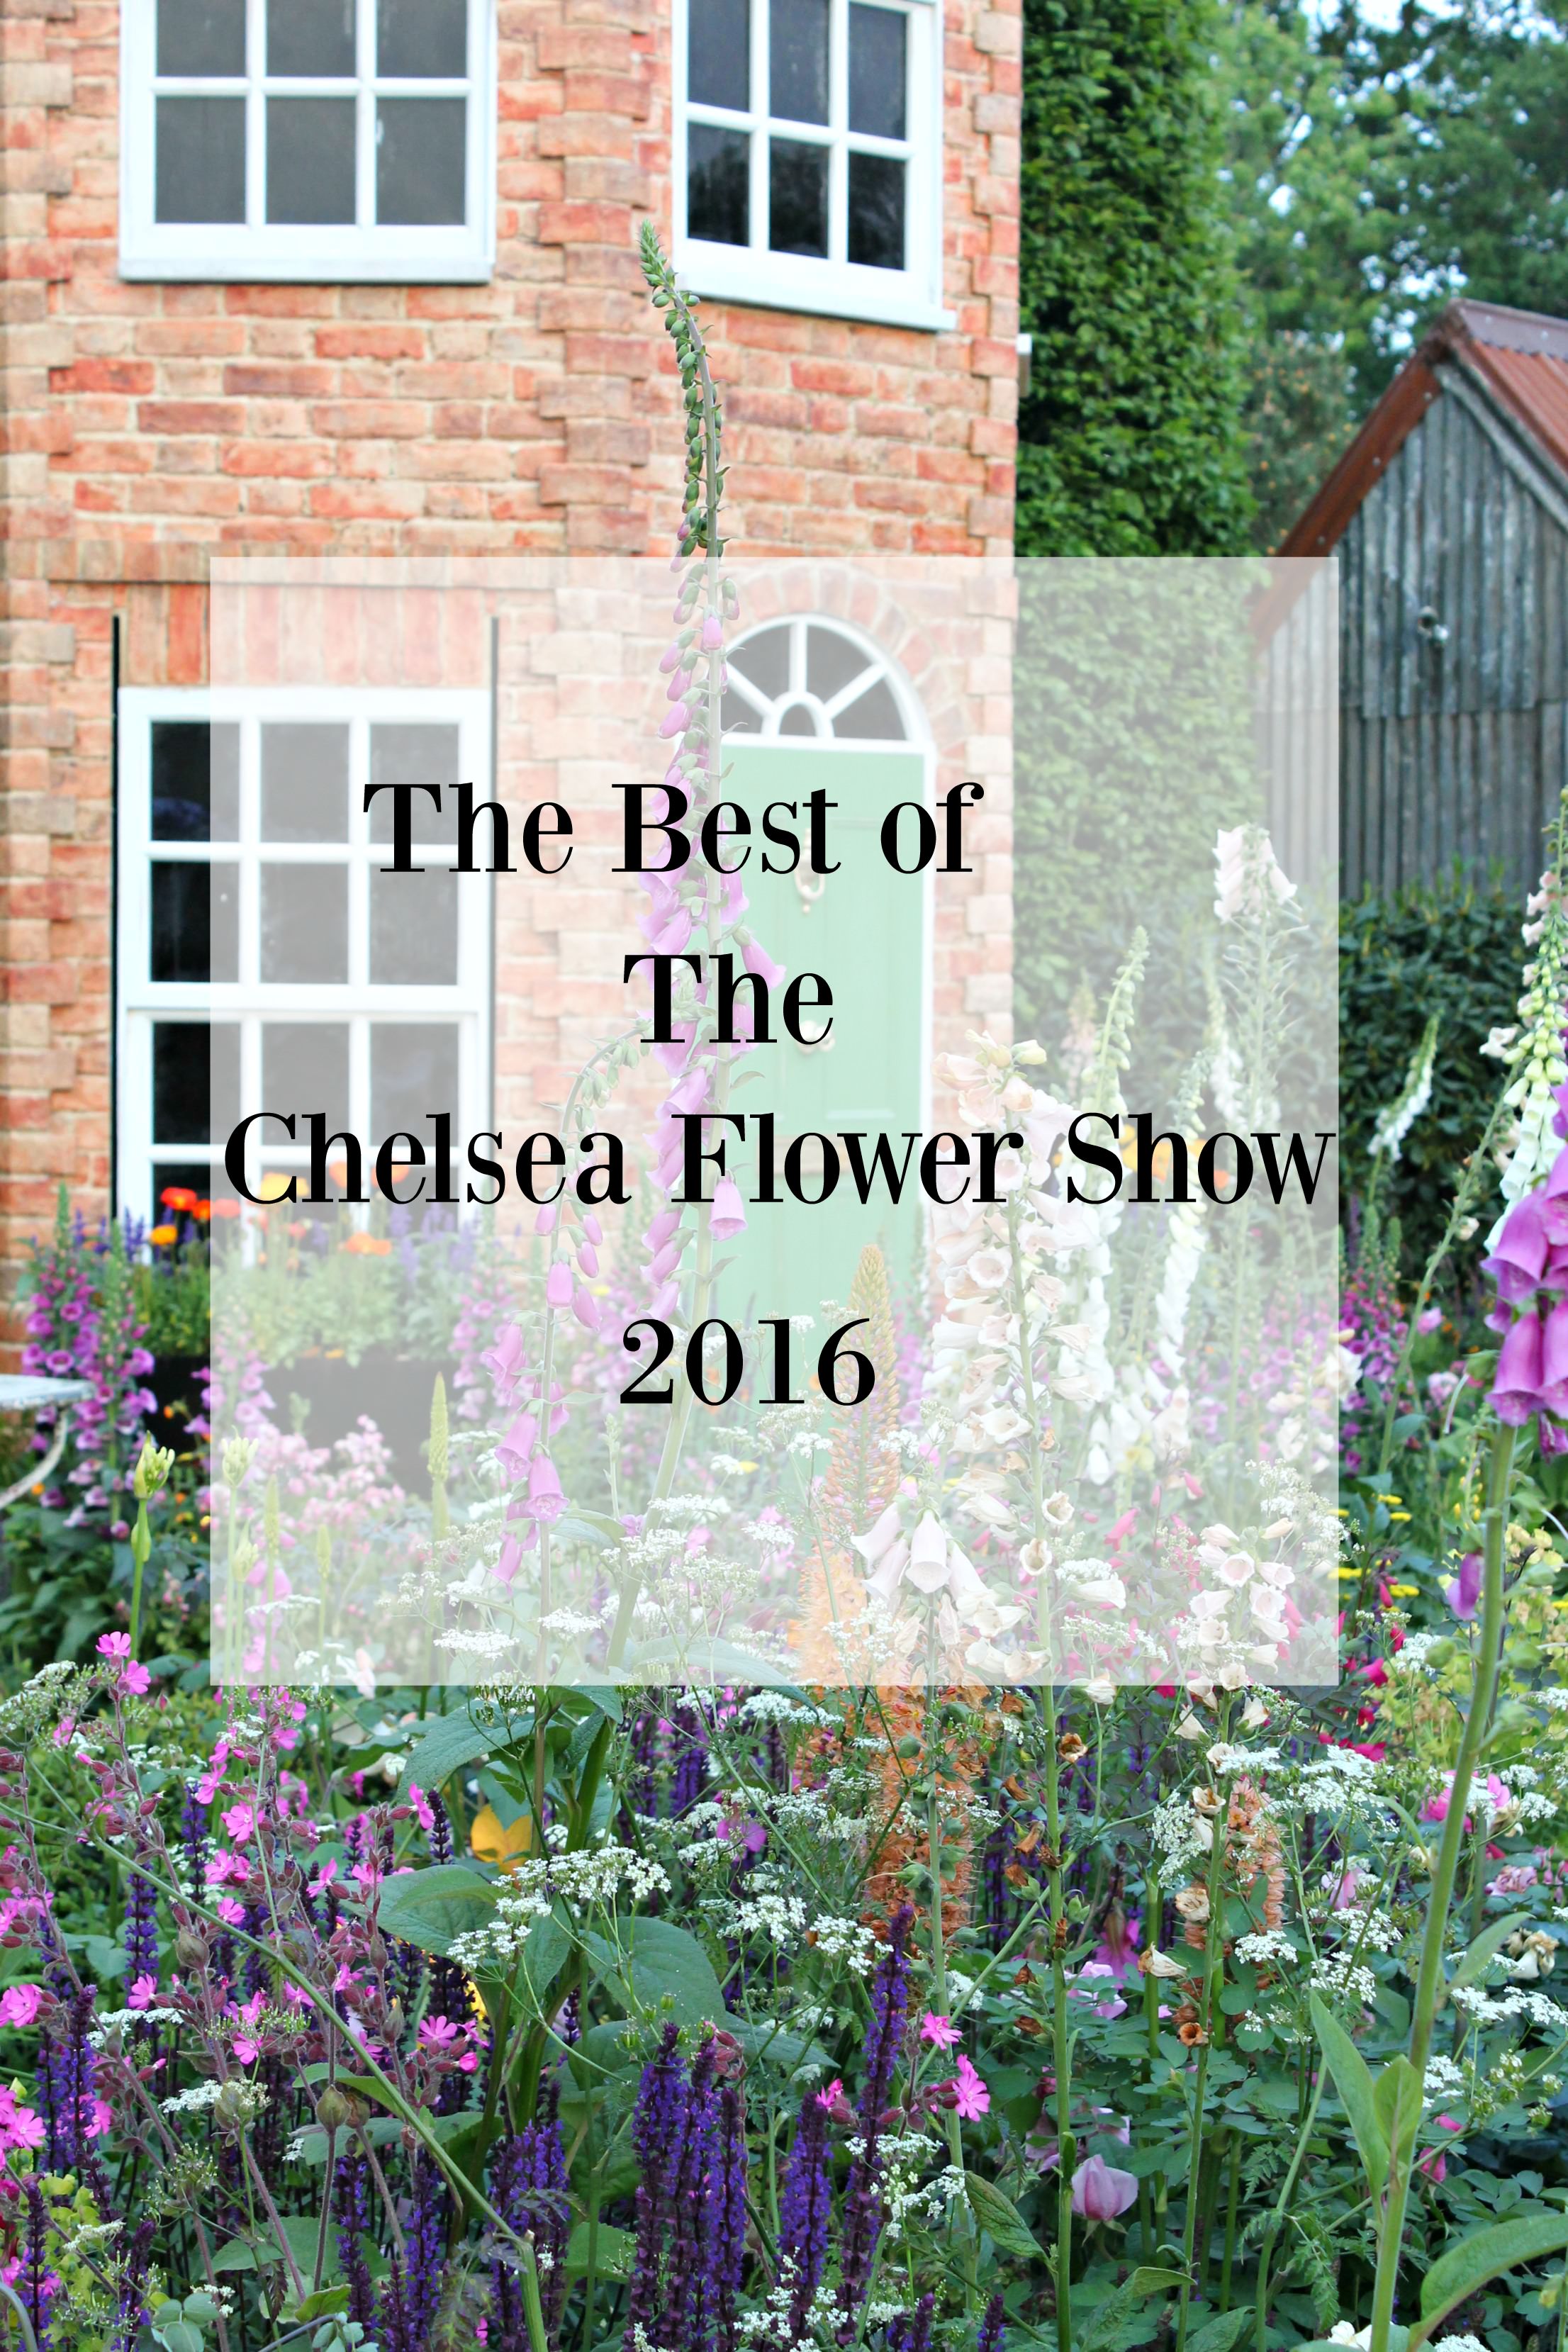 Colourful-garden-1-Chelsea-flower-show-photo-by-Geraldine-Tan-Little-Big-Bell